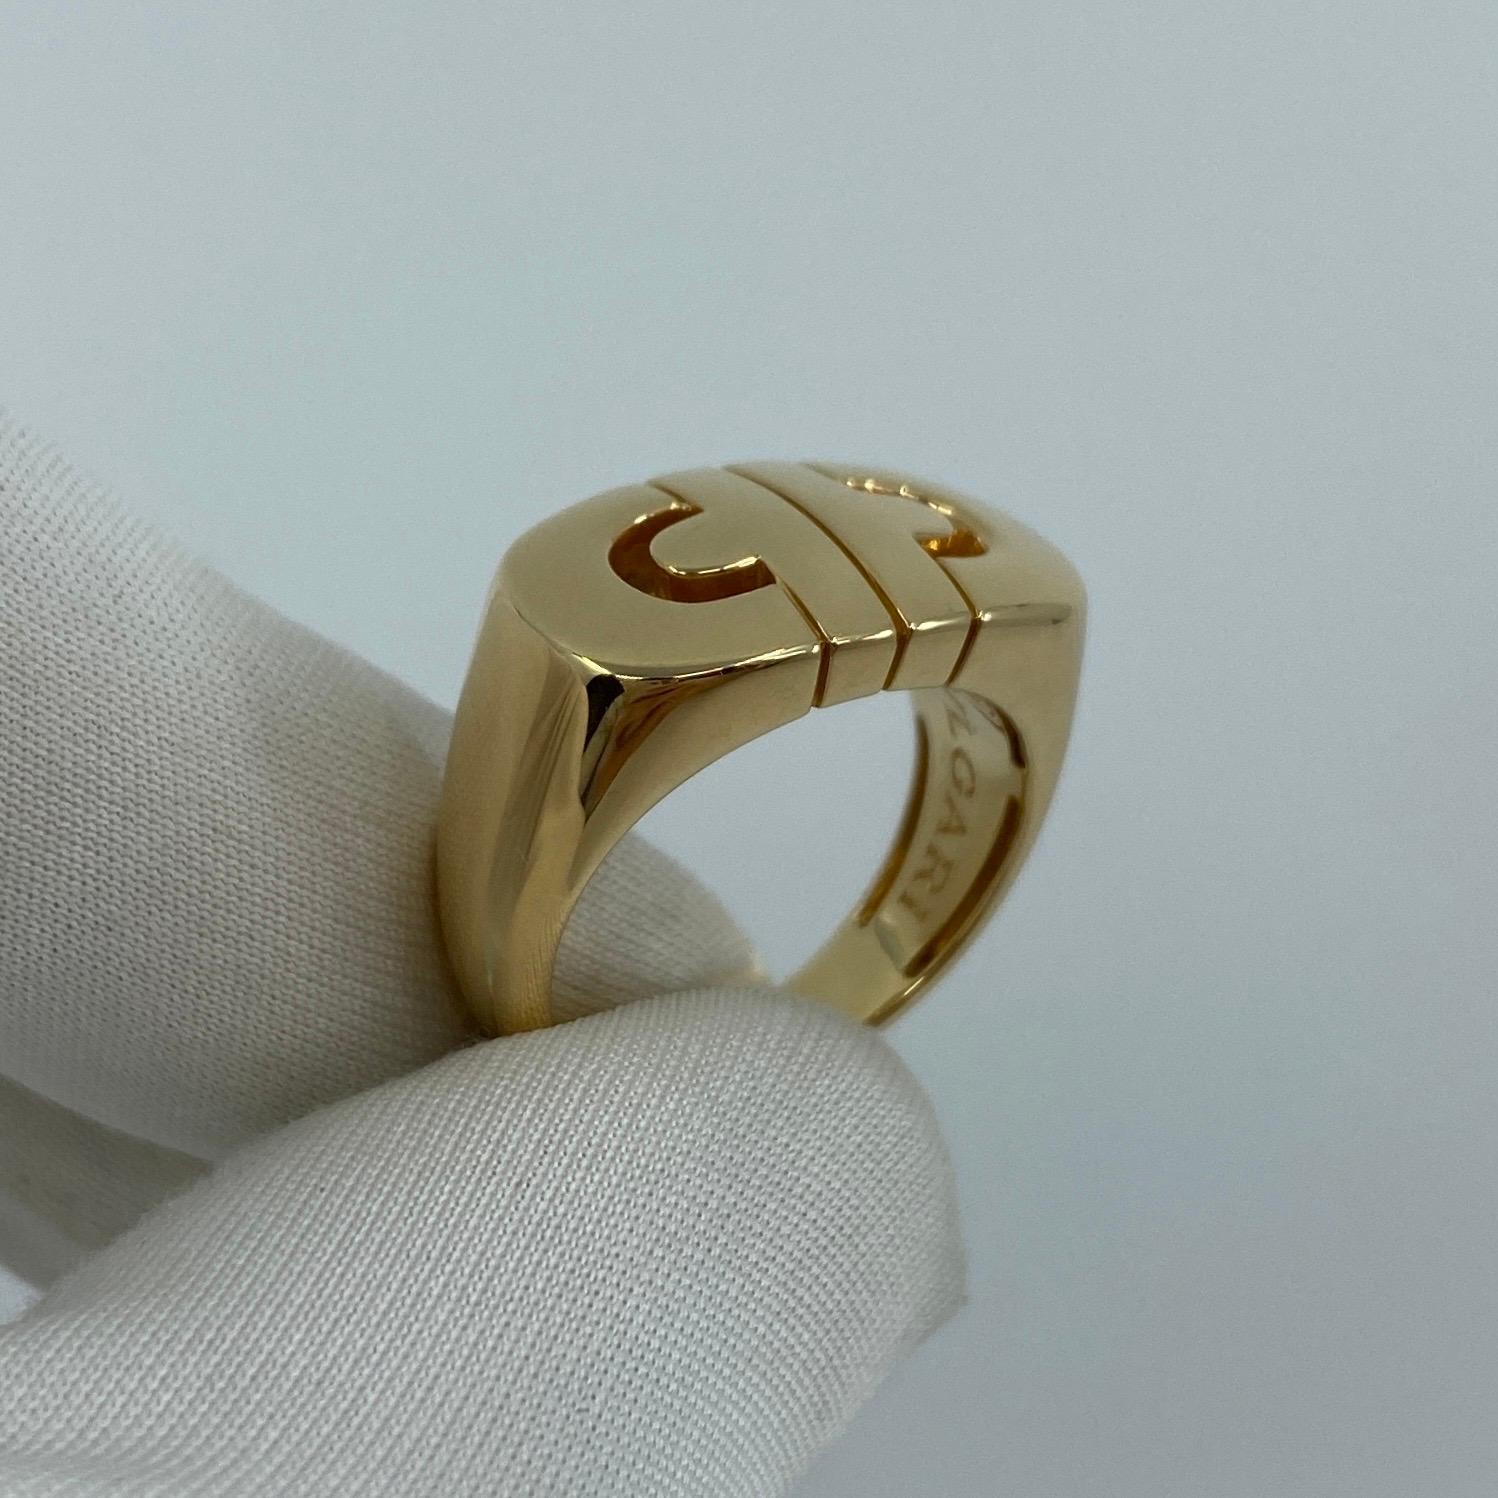 Vintage Bvlgari Parentesi Tubogas 18k Yellow Gold 'Signet Style' Italian Ring 1